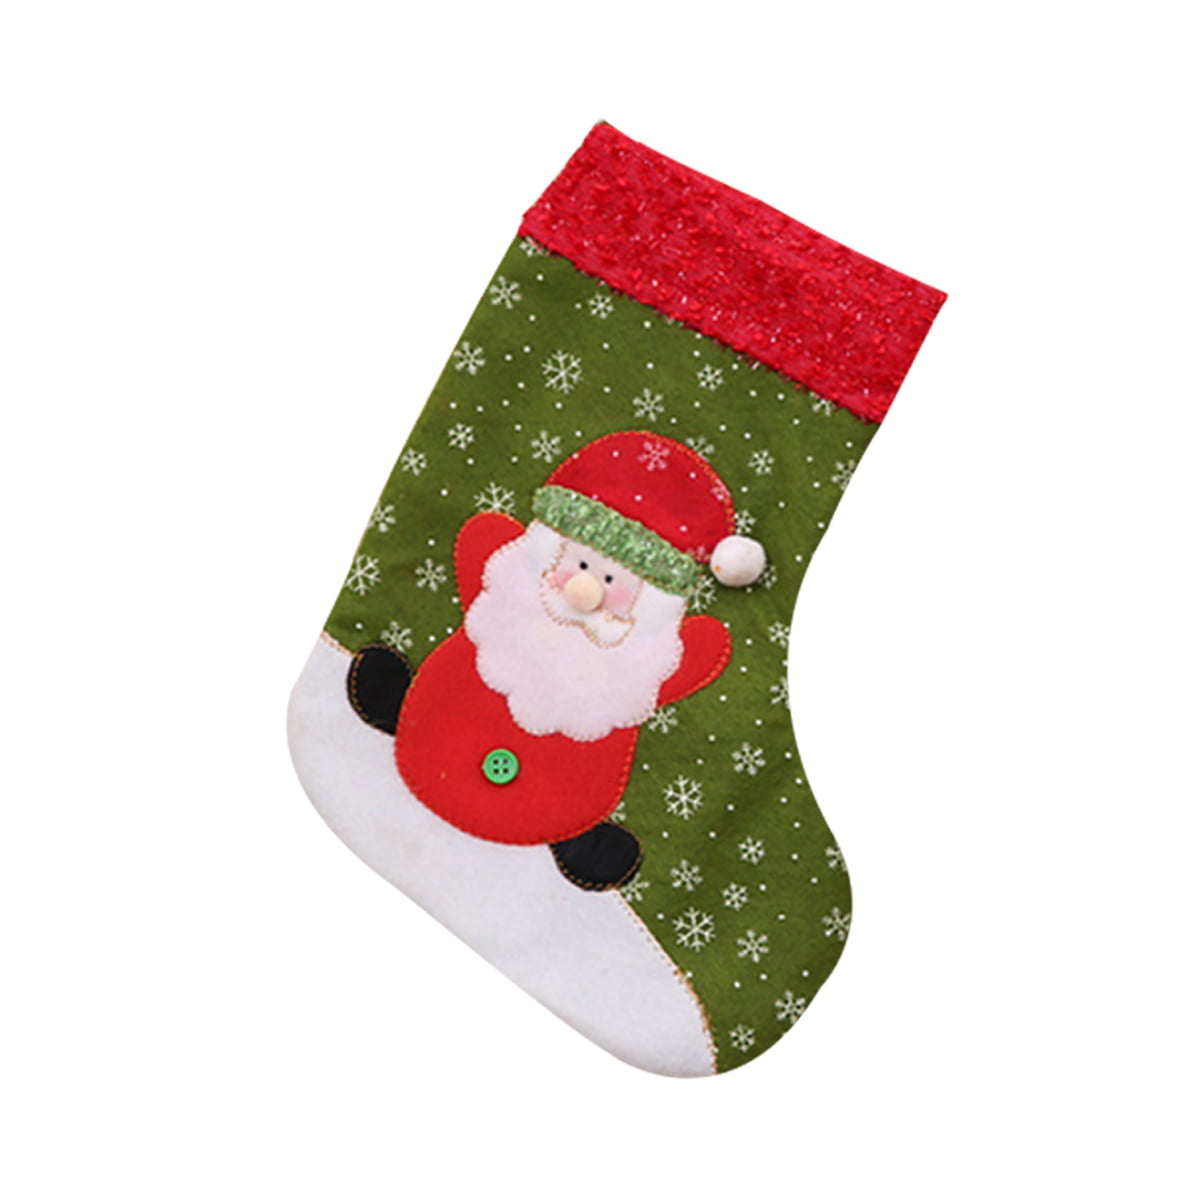 Christmas decorations Stocking Christmas Gift Boots Xmas Holders medias de navid 